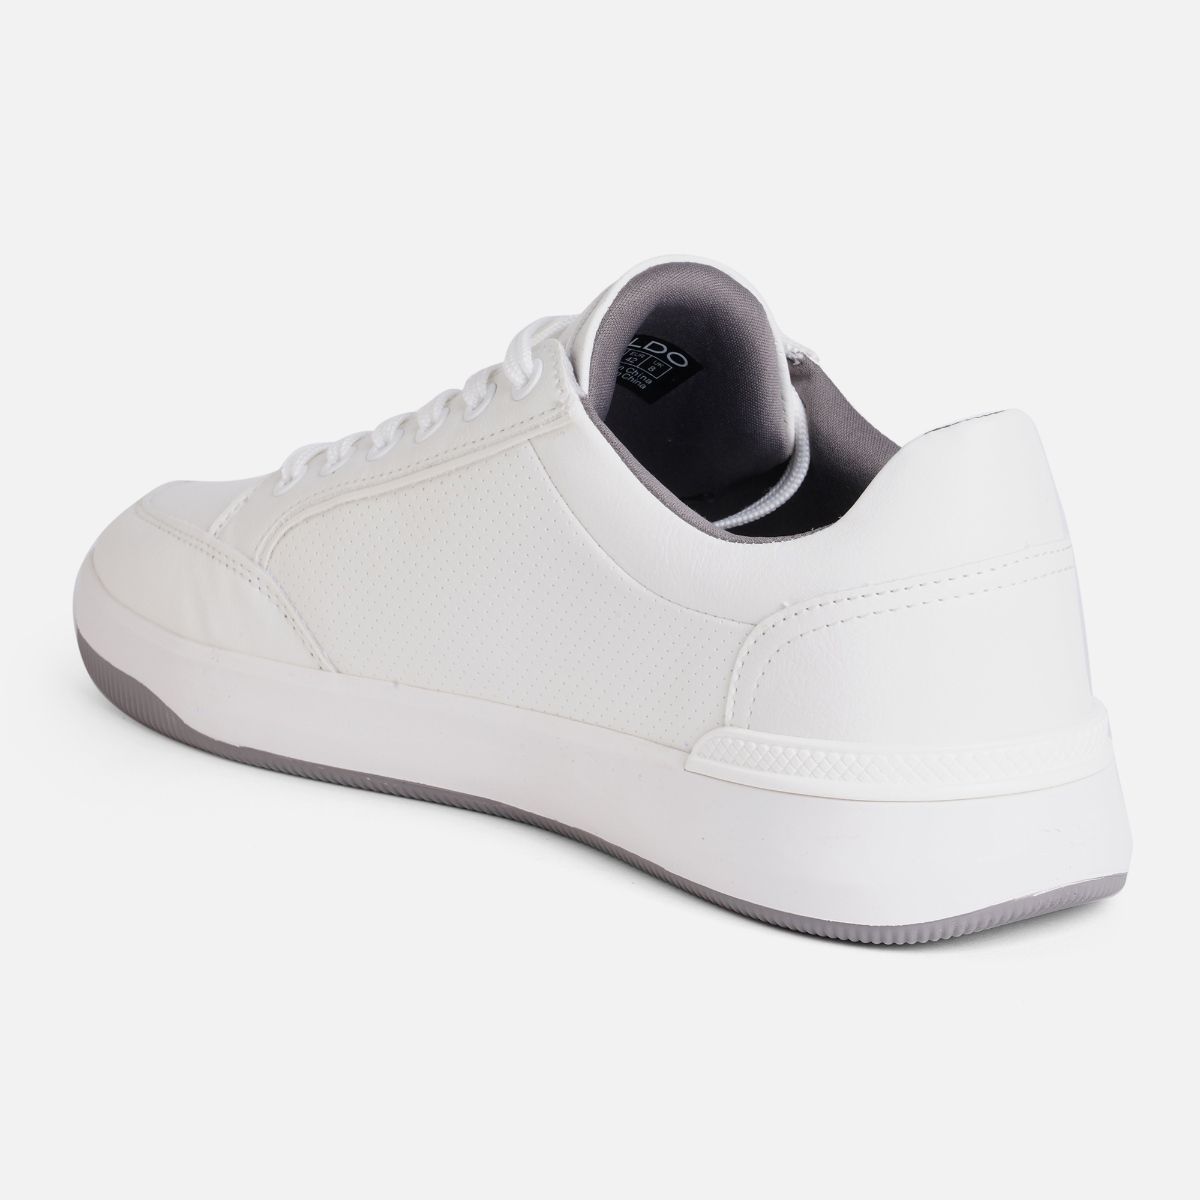 Aldo flatform sneakers in white | ASOS